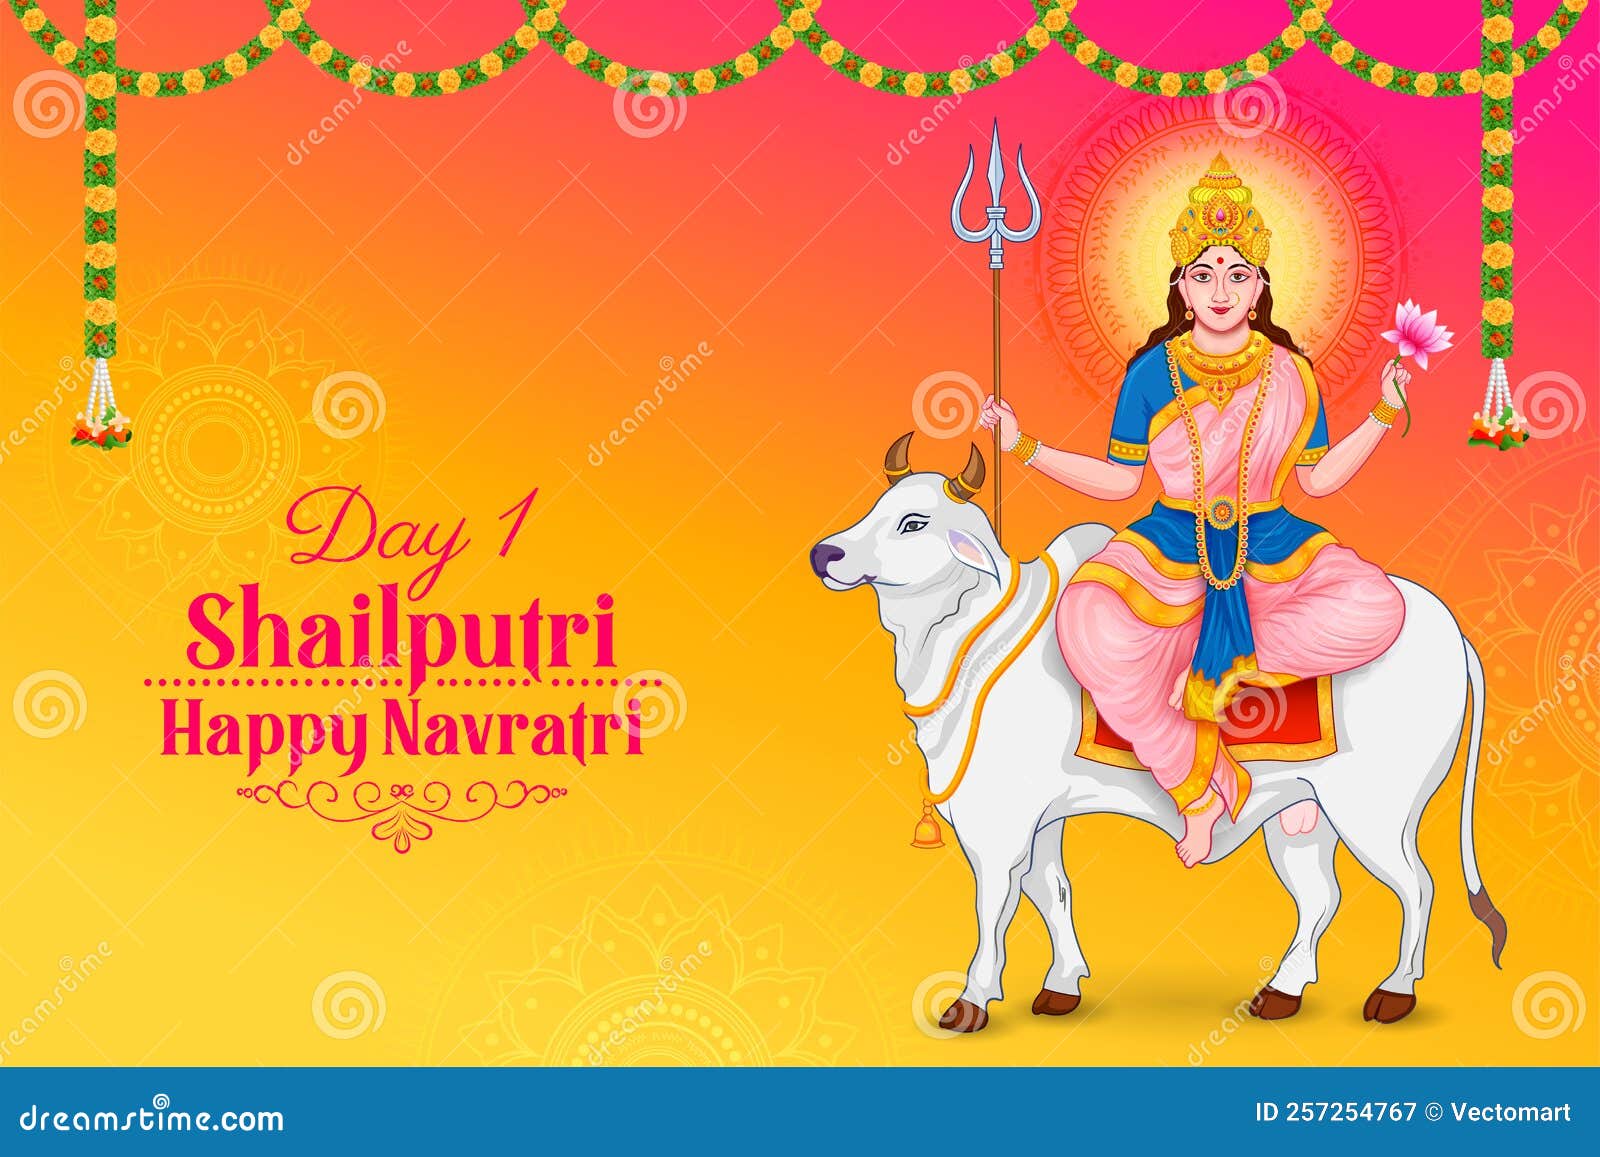 Goddess Shailputri Devi for the First Navadurga of Navratri ...